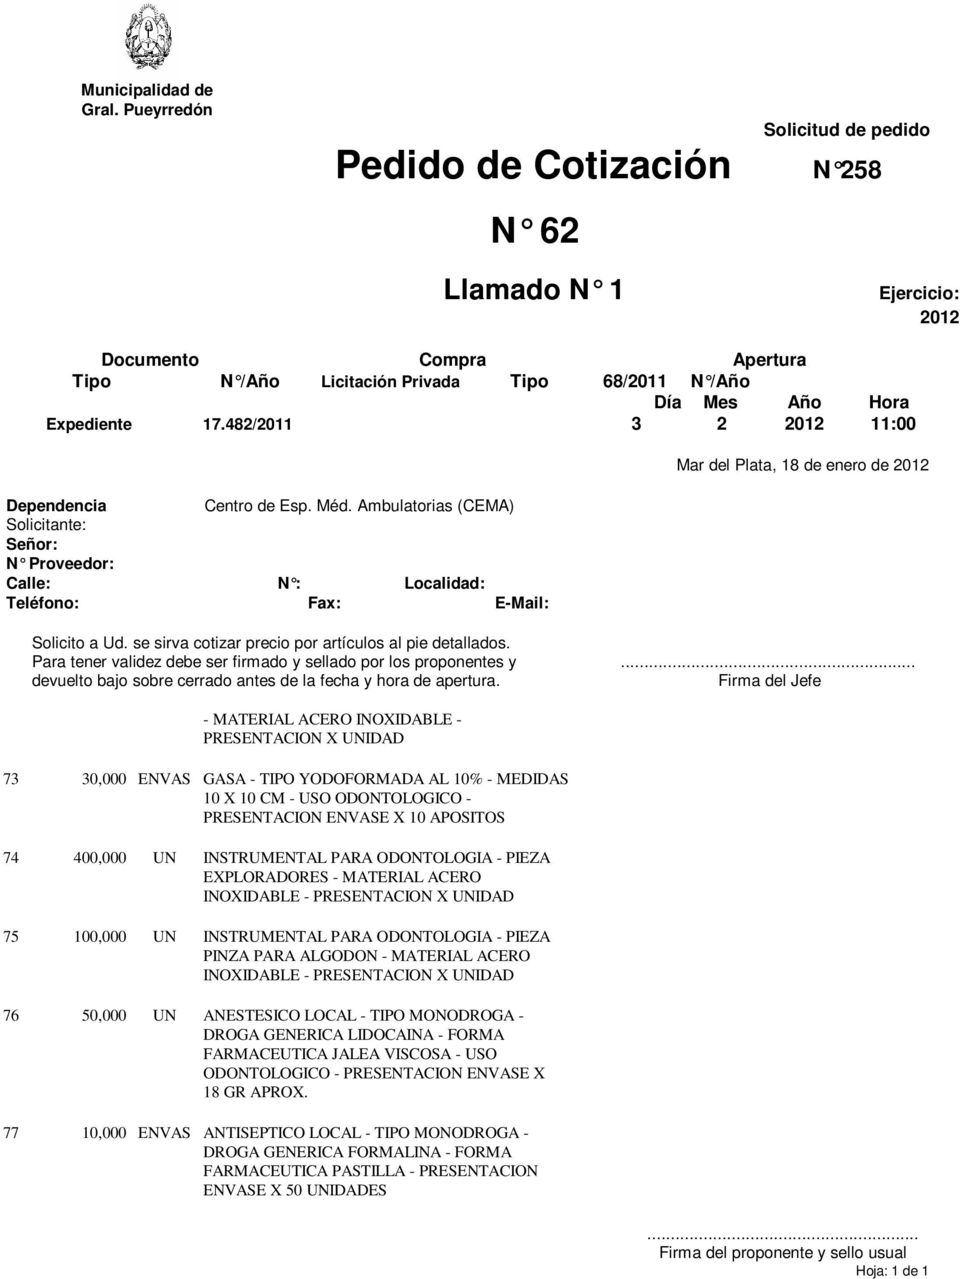 ODONTOLOGIA - PIEZA EXPLORADORES - MATERIAL ACERO INOXIDABLE - 75 100,000 UN INSTRUMENTAL PARA ODONTOLOGIA - PIEZA PINZA PARA ALGODON - MATERIAL ACERO INOXIDABLE - 76 50,000 UN ANESTESICO